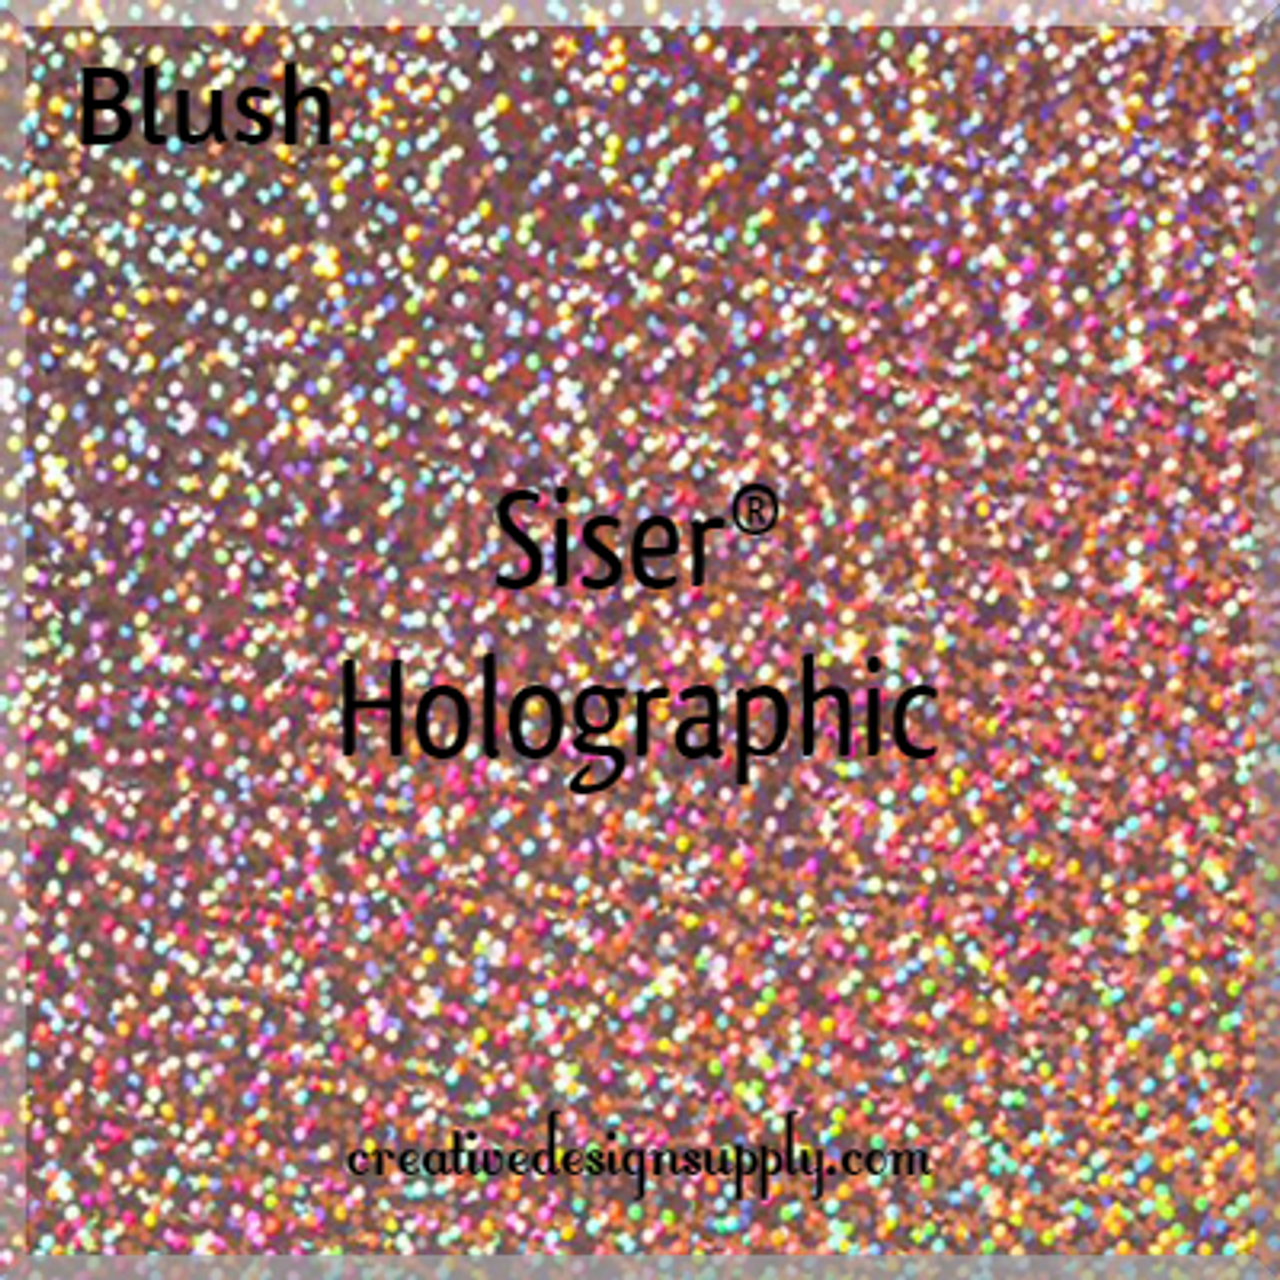 Siser® Holographic | Blush